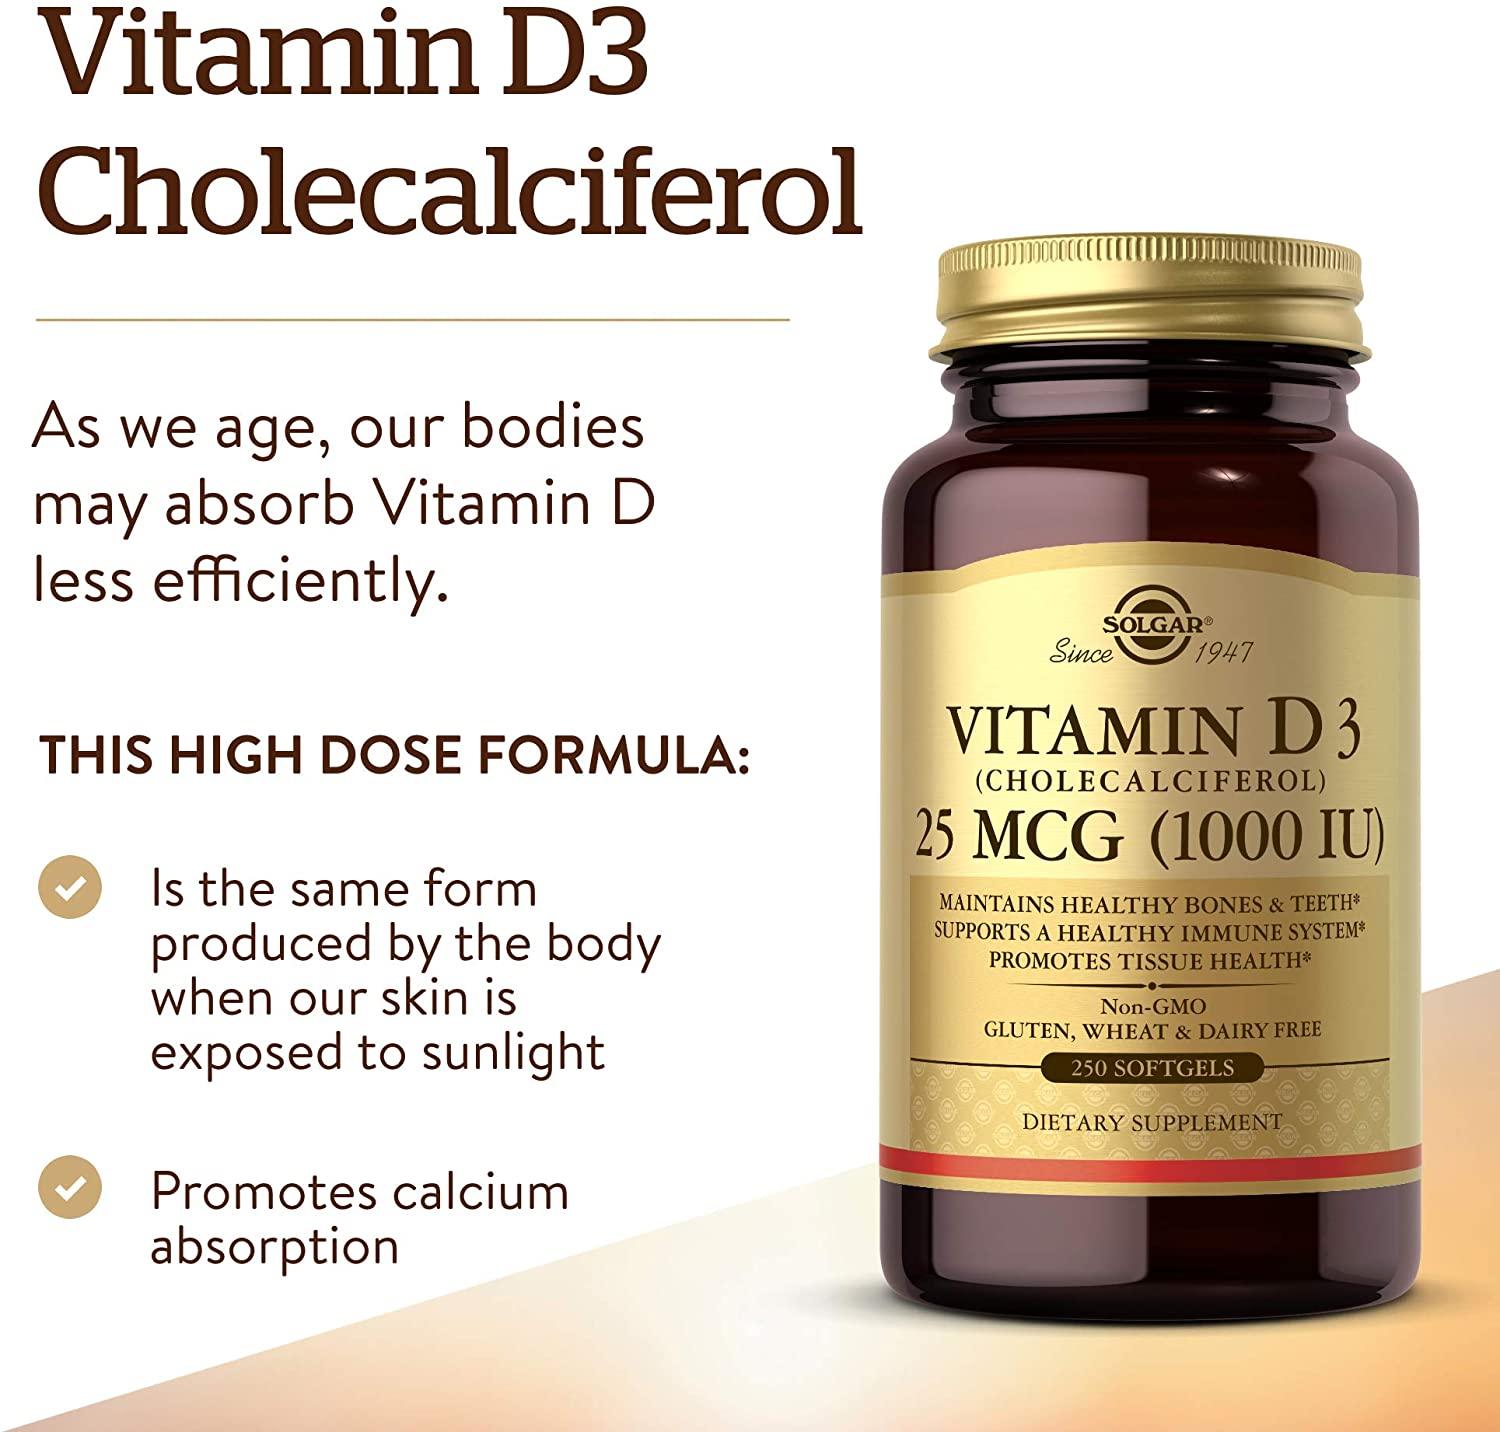 Solgar Vitamine D3 (Cholecalciferol) 25 MCG (1000 IU) - mondialpharma.com